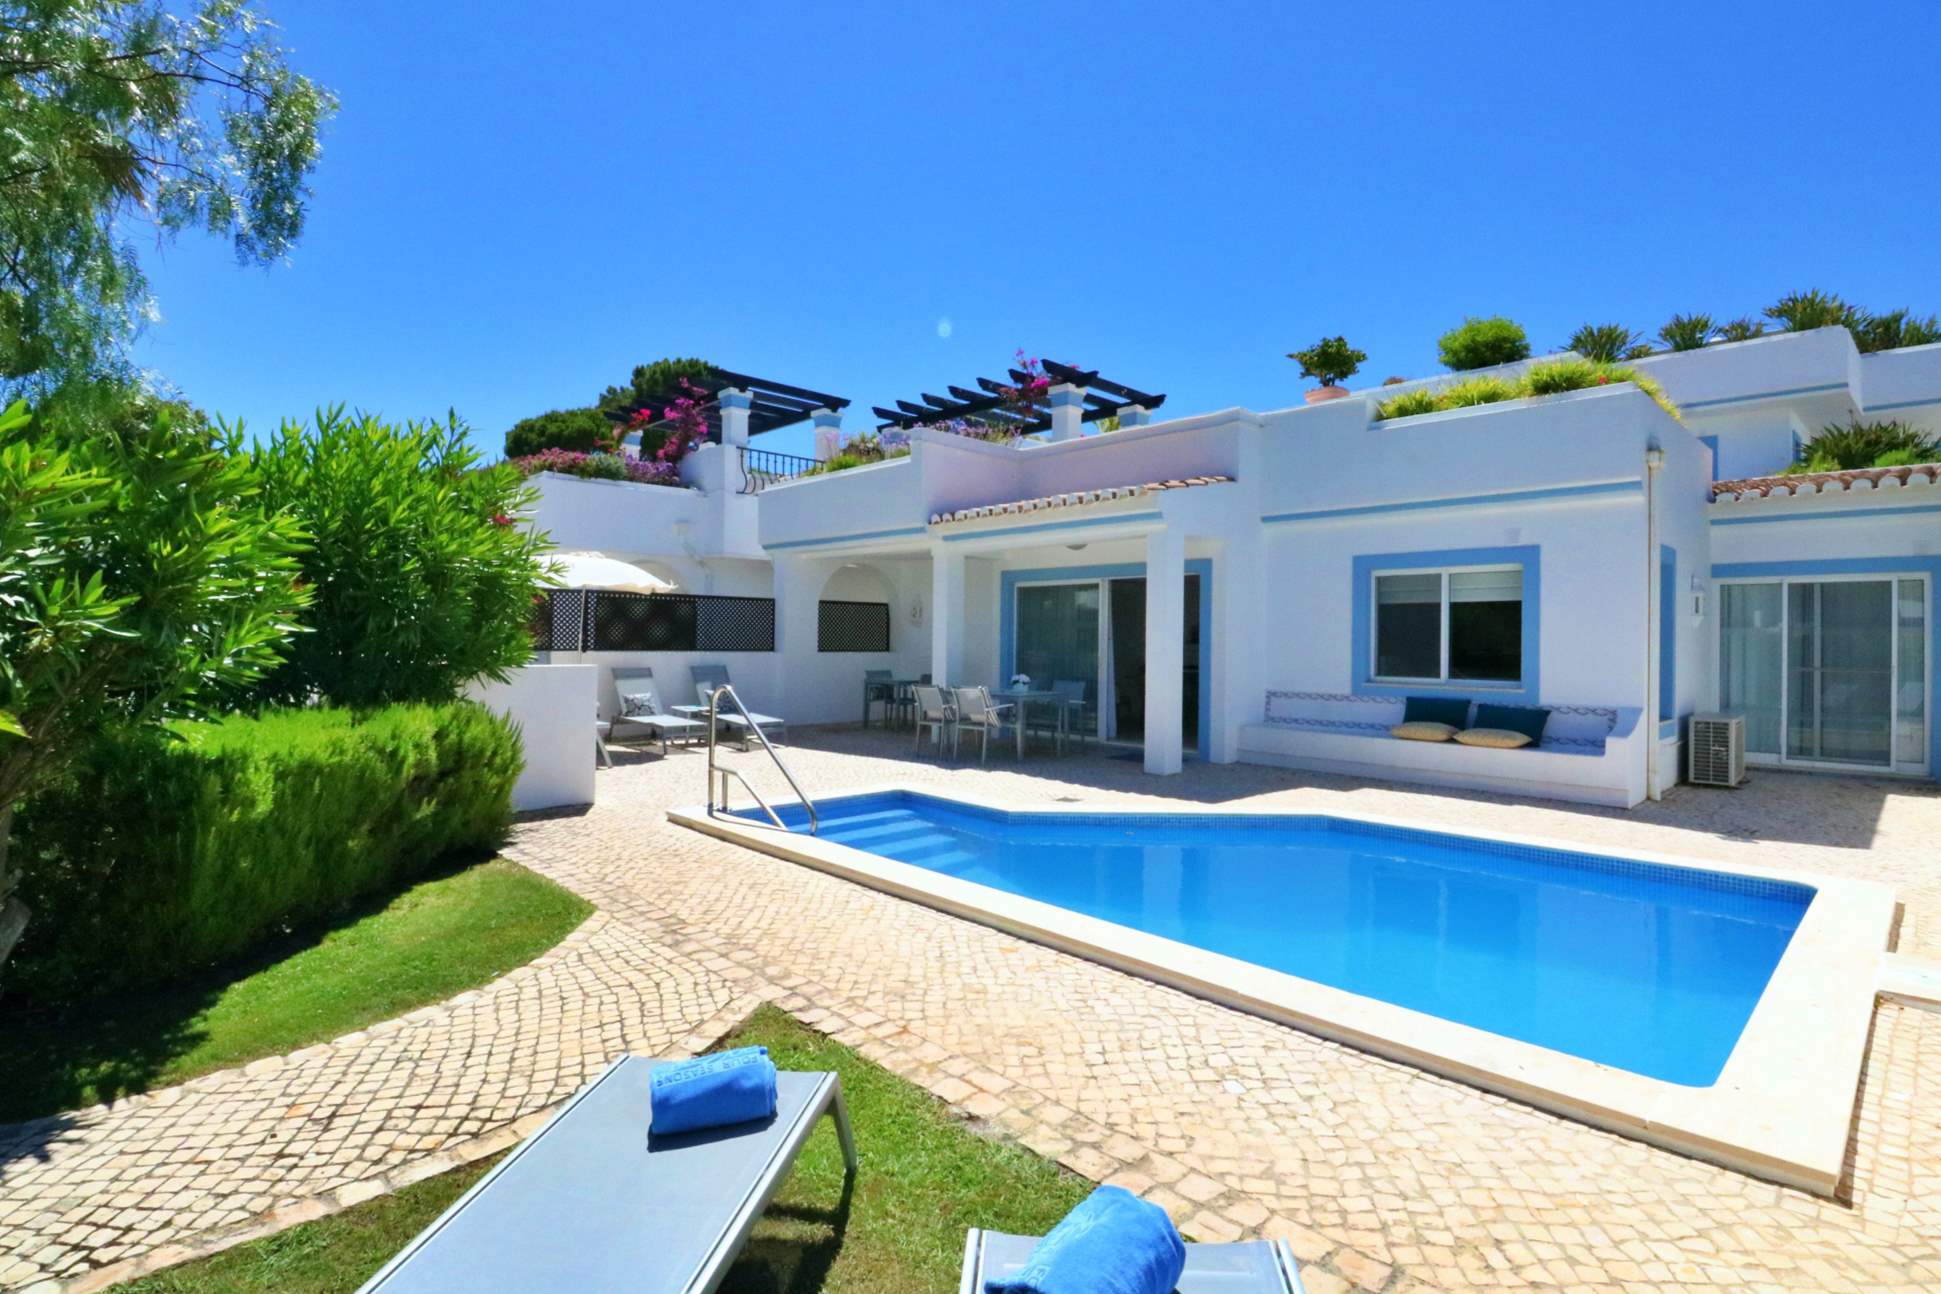 Four Seasons Fairways 2 Bed Hillside Apartment, Thursday Arrival, 2 bedroom villa in Four Seasons Fairways, Algarve